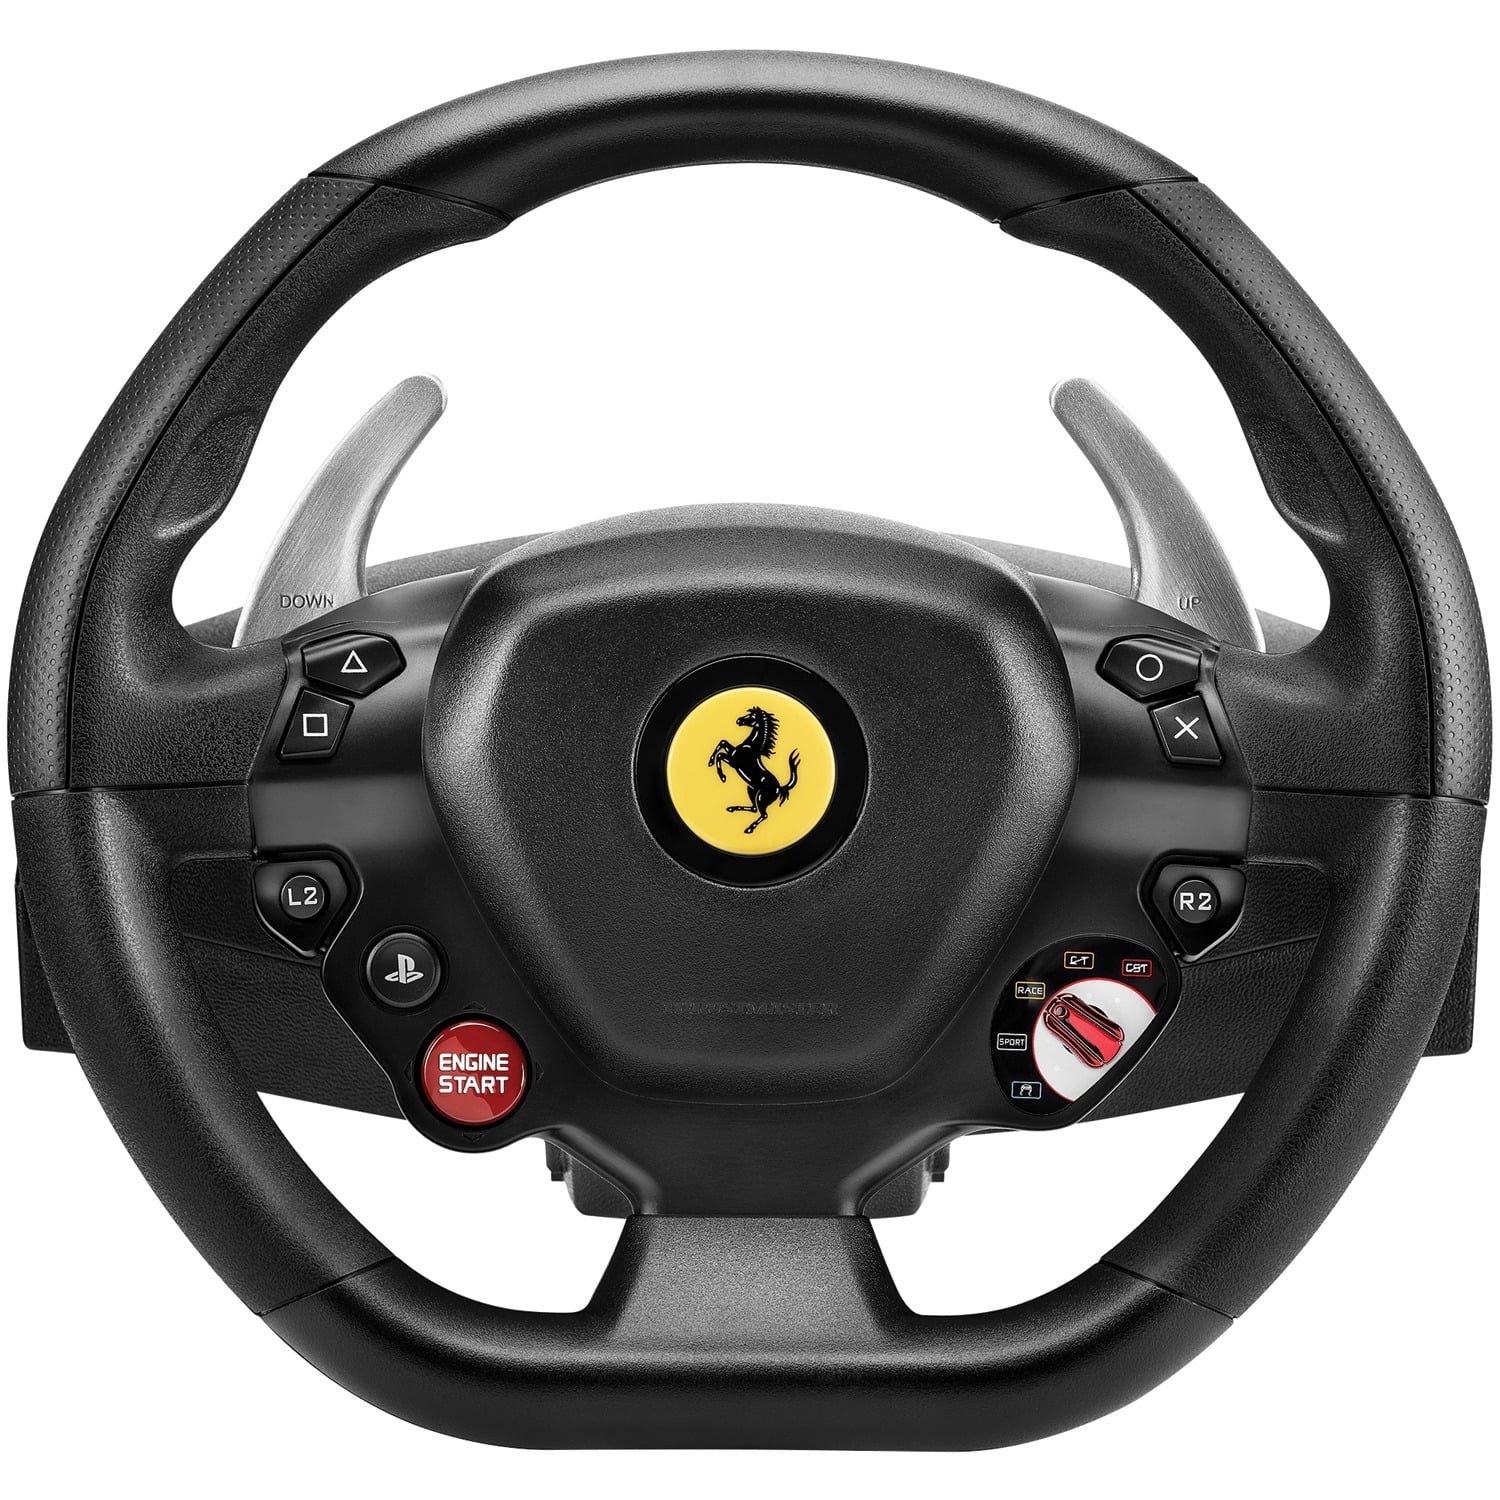 Thrustmaster T80 Ferrari 488 GTB Edition Racing Wheel for PS5, PS4, PC - Walmart.com